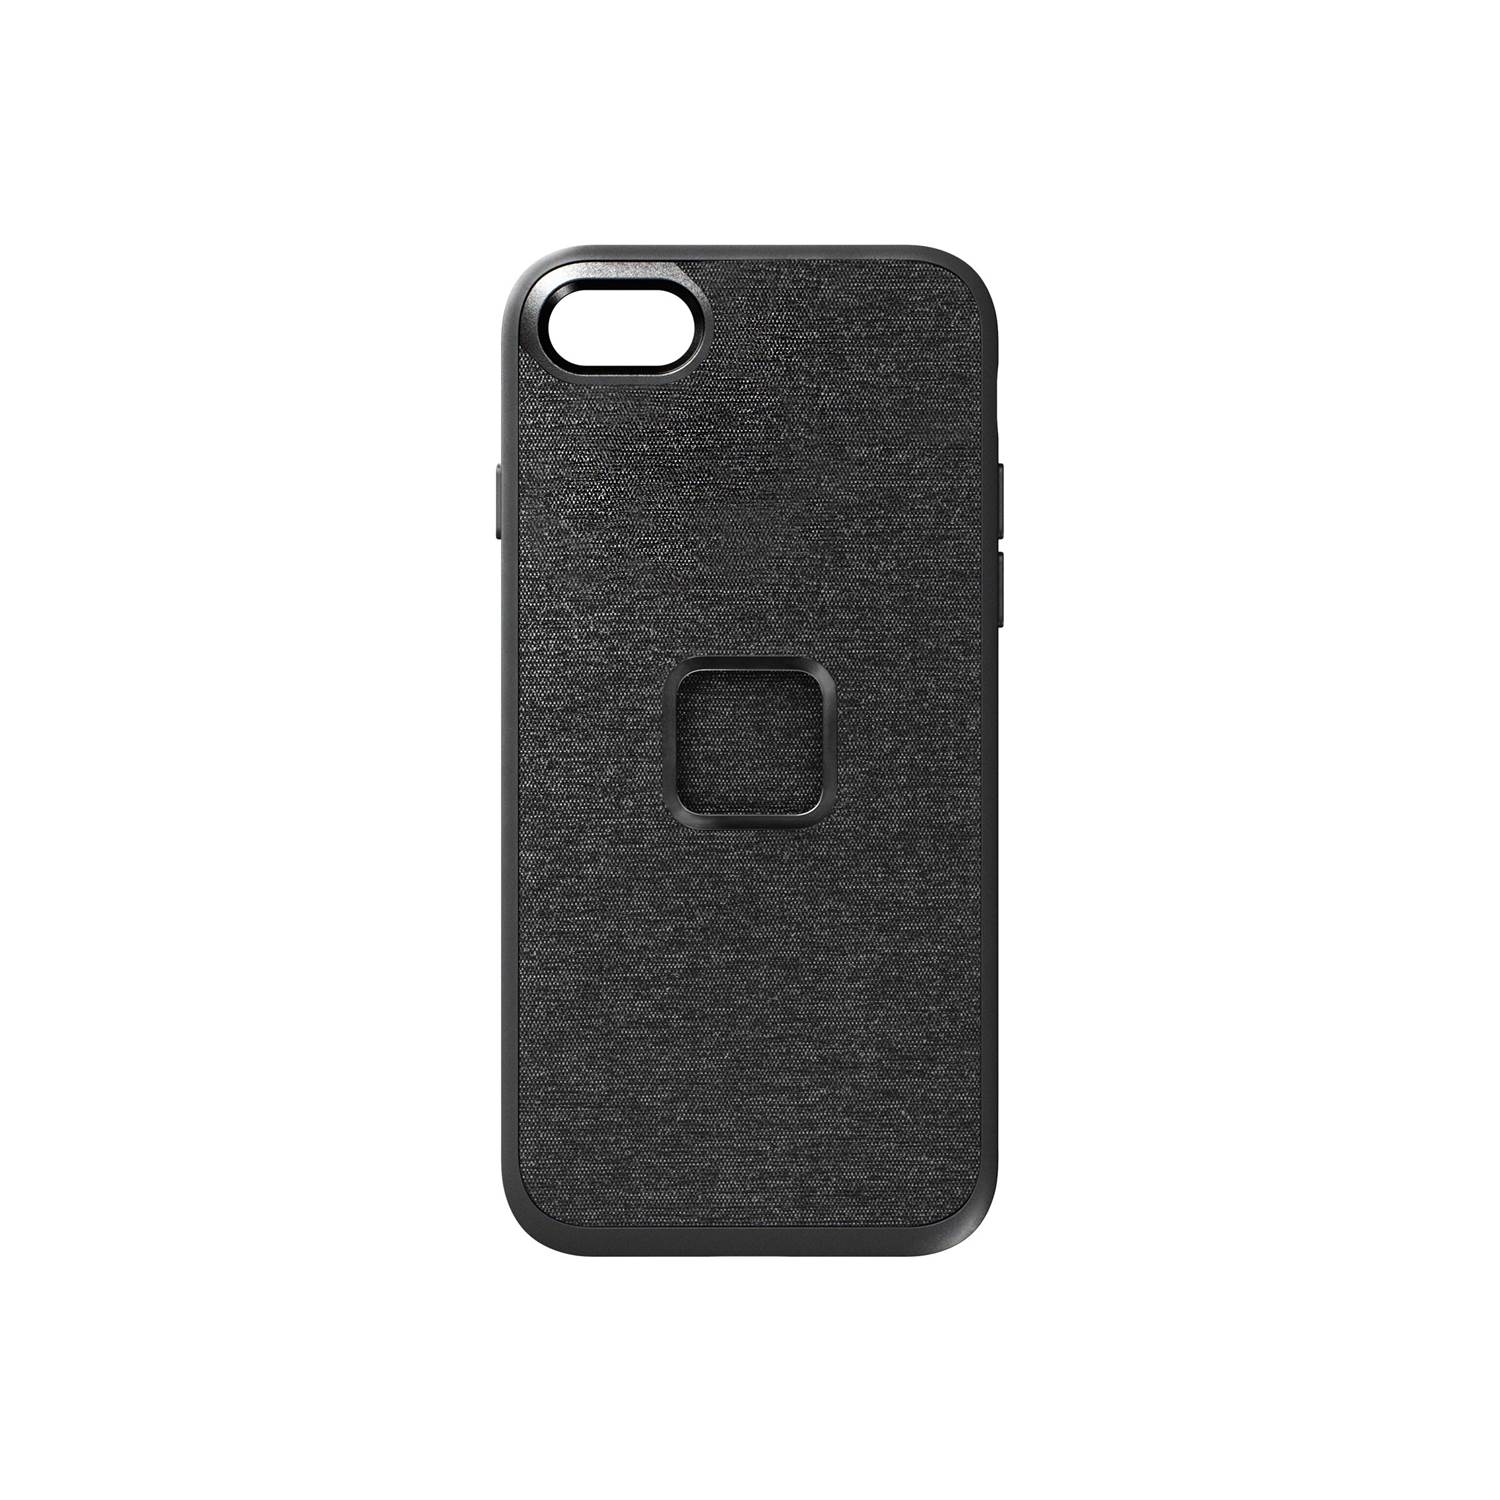 Peak Design Everyday Fabrice Case iPhone SE - Charcoal